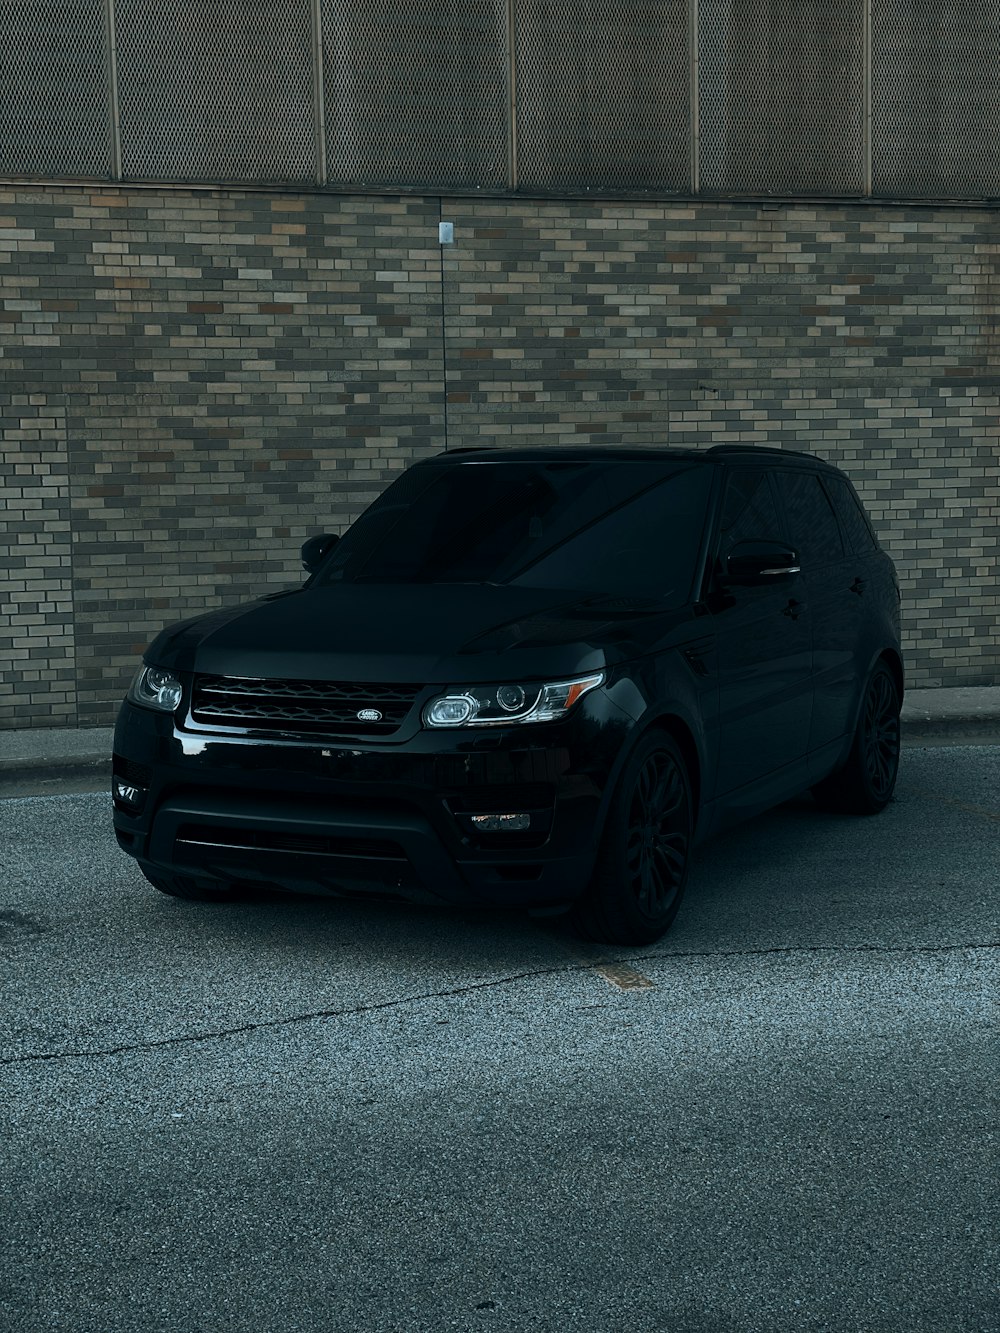 black honda car parked beside brown brick wall